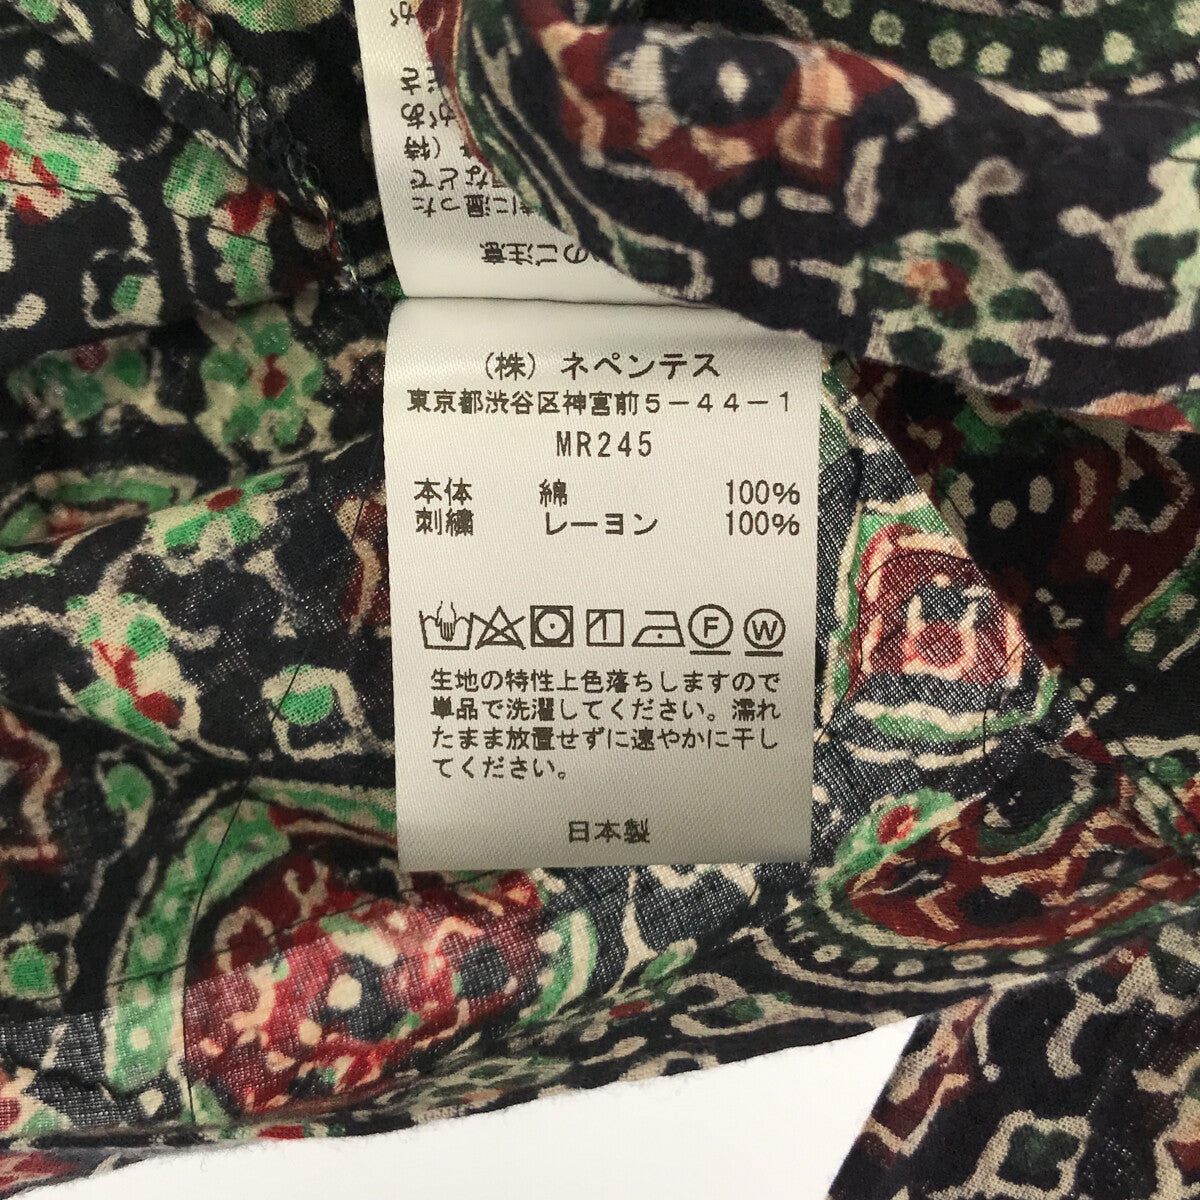 Needles / ニードルス | 2023SS | L/S Cabana Shirt - India Cotton Lawn / Batik Printed パピヨン カバナシャツ | S |